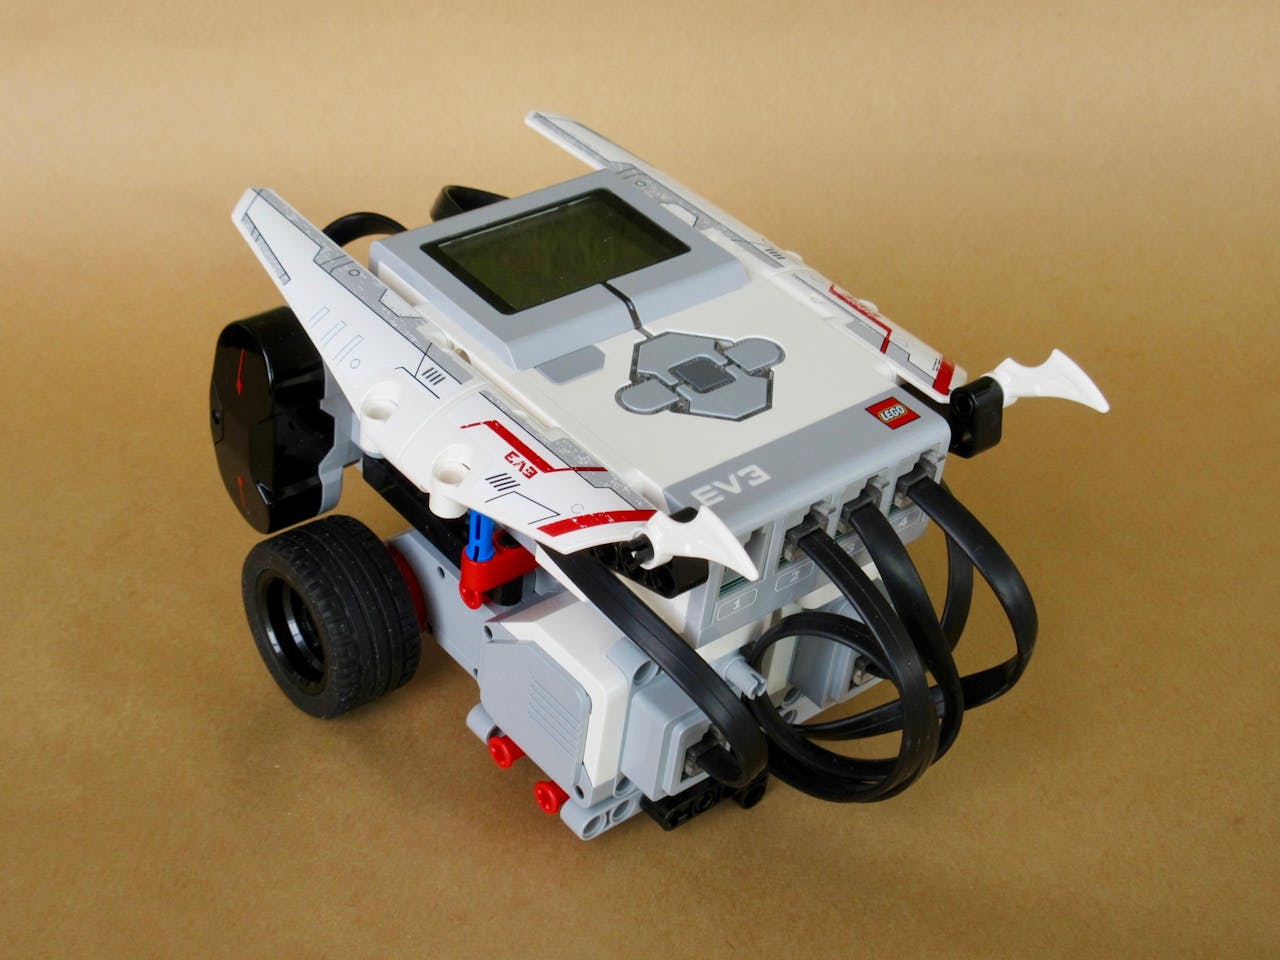 LEGO MINDSTORMS EV3 Smart AI-Powered LEGO Bird Learns How To Sort Bricks 